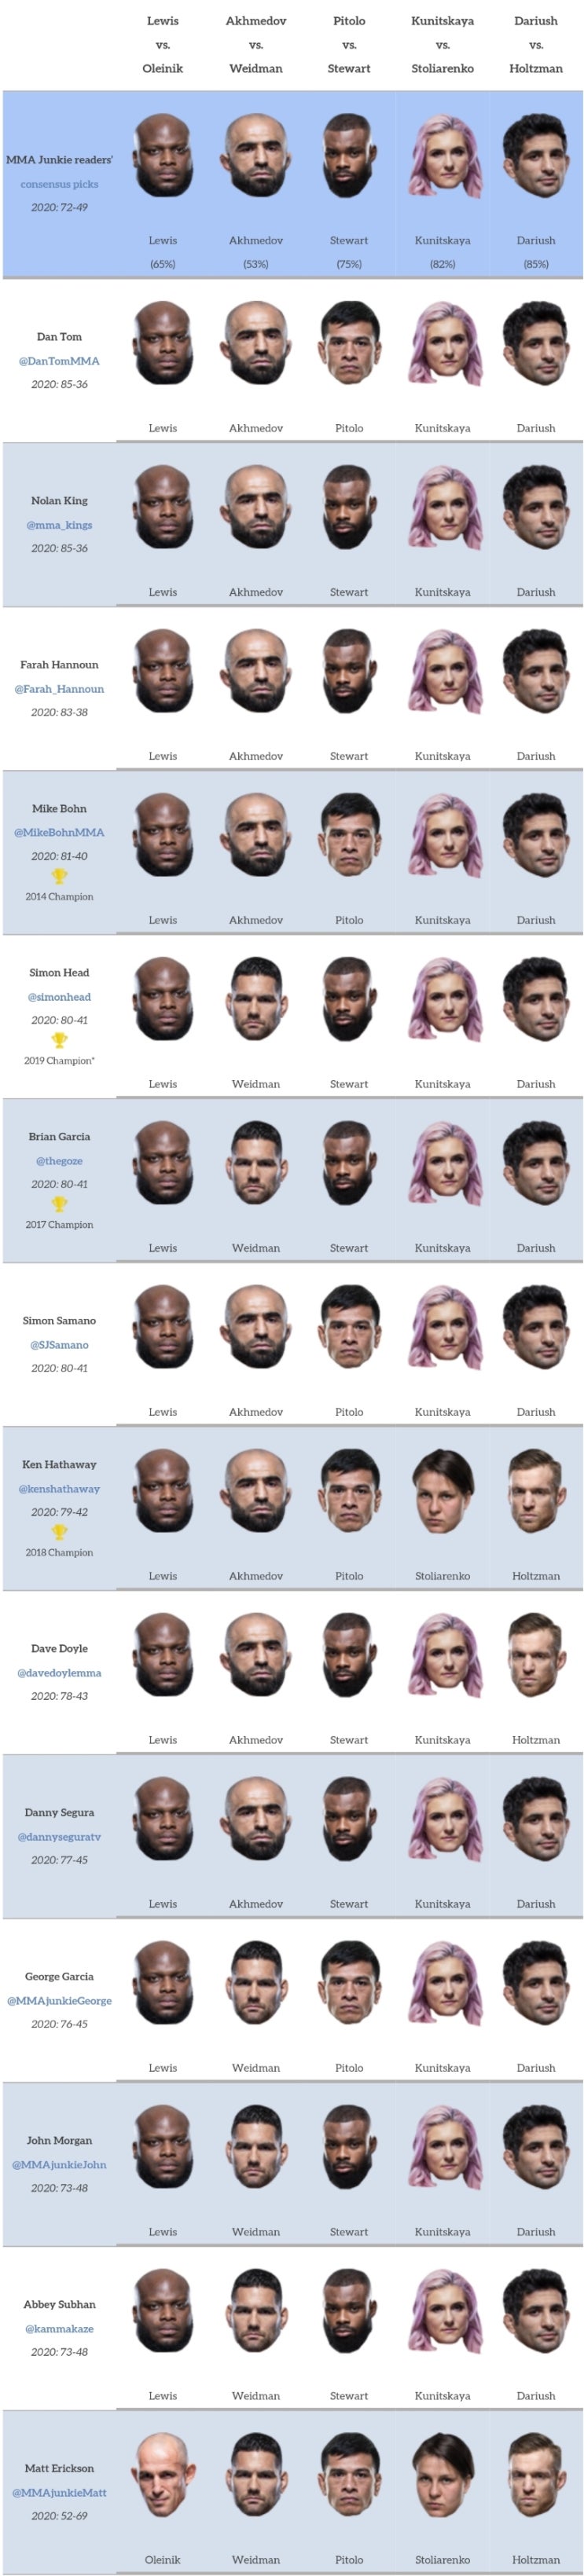 UFC 베가스 6: 루이스 vs 올레이닉 미디어 예상 및 배당률